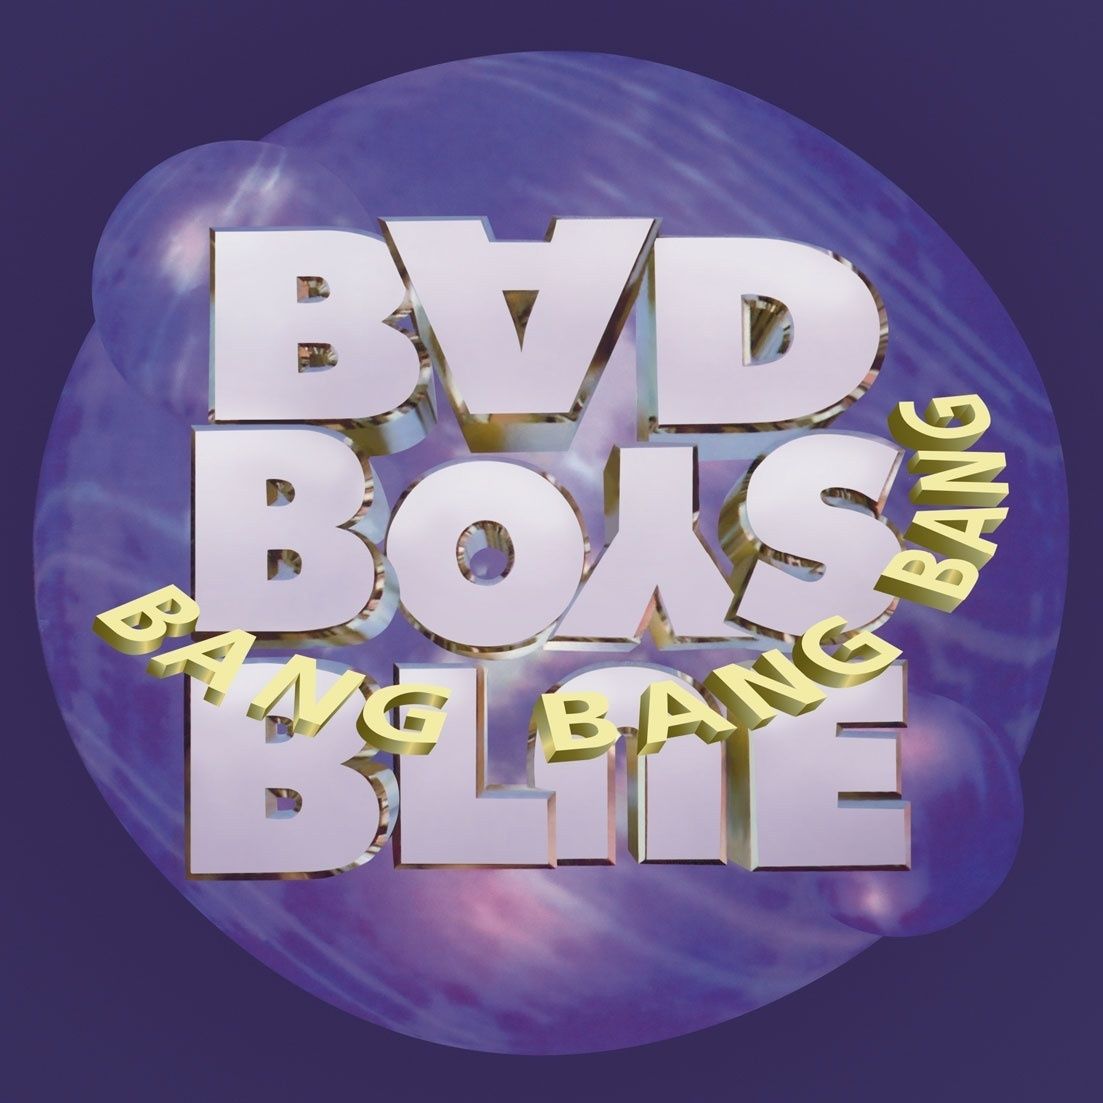 Виниловая пластинка LP: Bad Boys Blue — «Bang! Bang! Bang!» (1996/2022) [Limited Purple Vinyl]